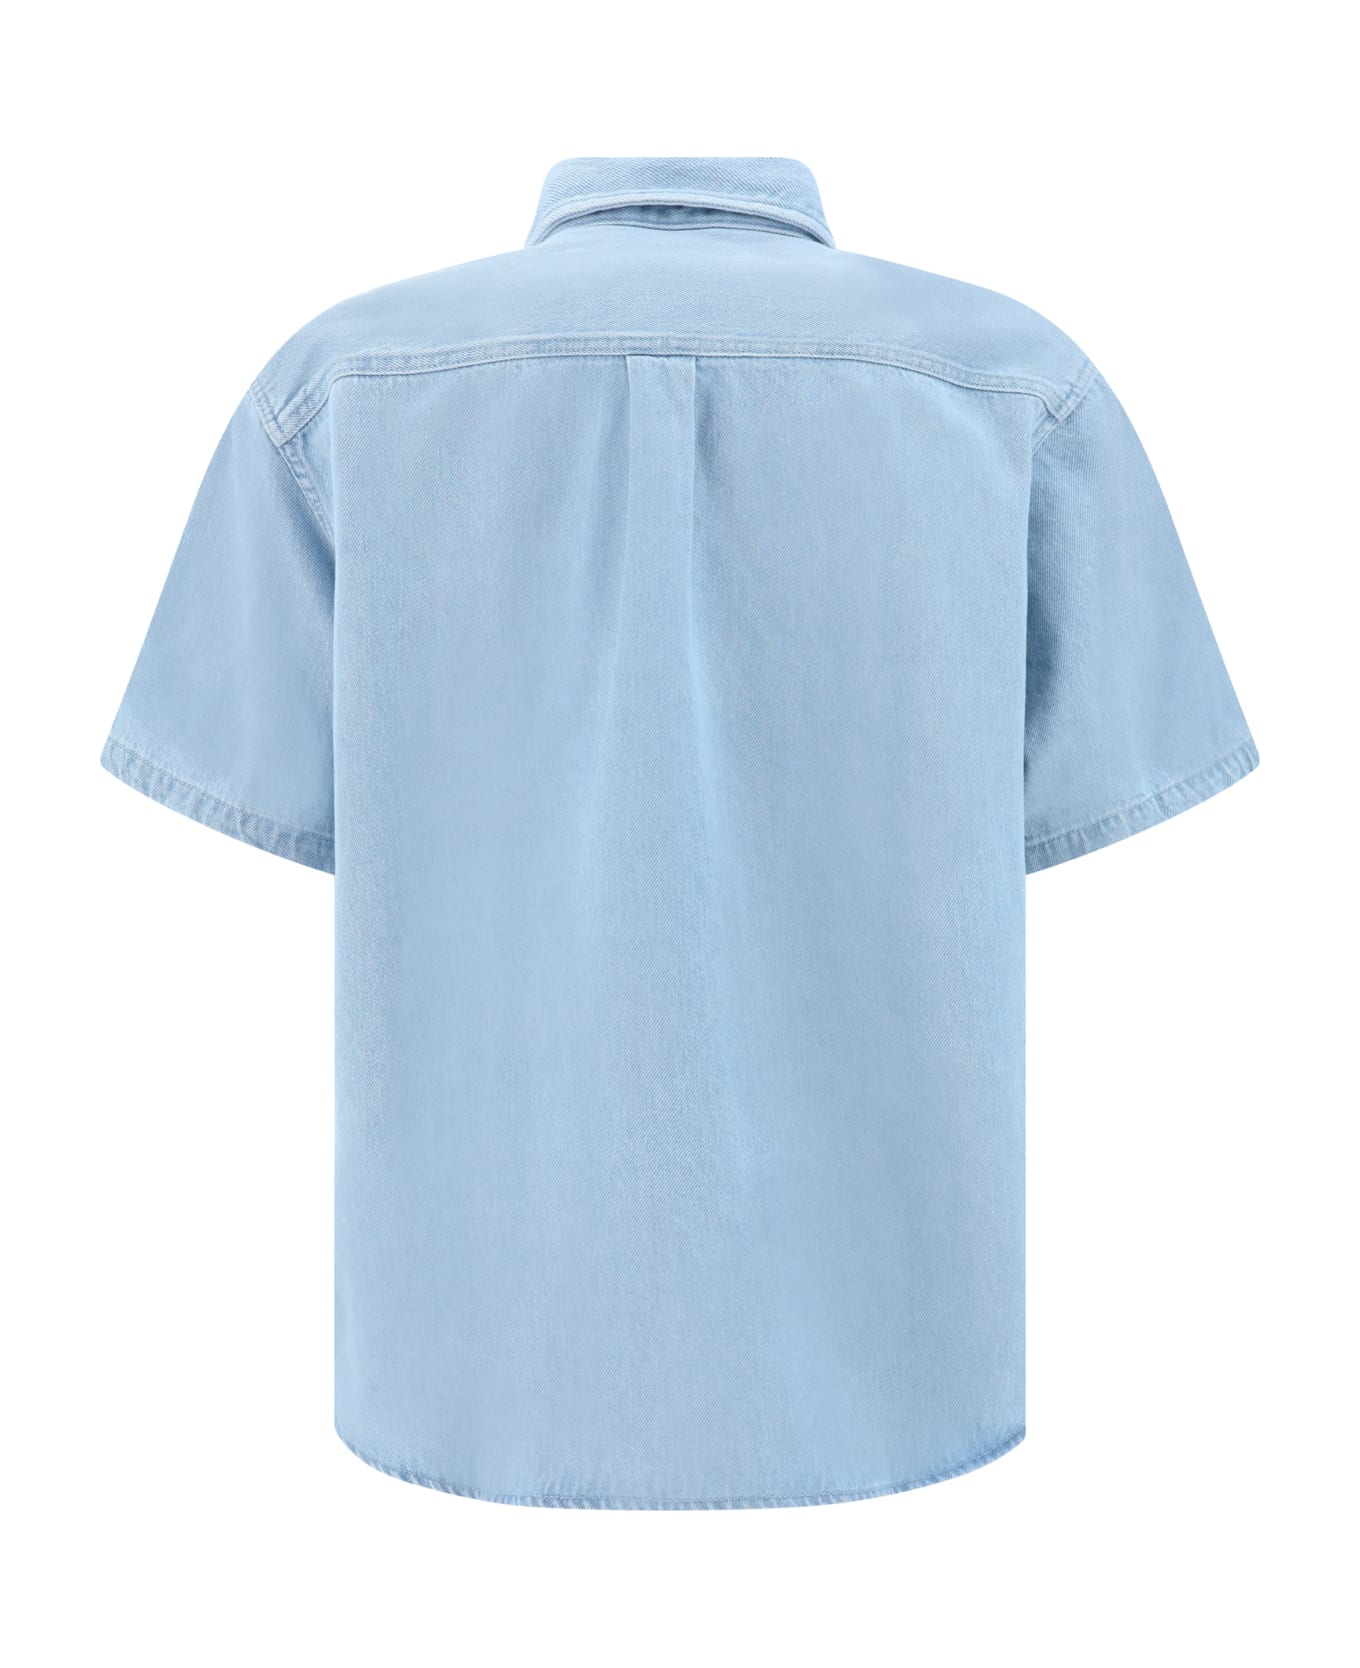 Carhartt Ody Denim Shirt - Blue シャツ